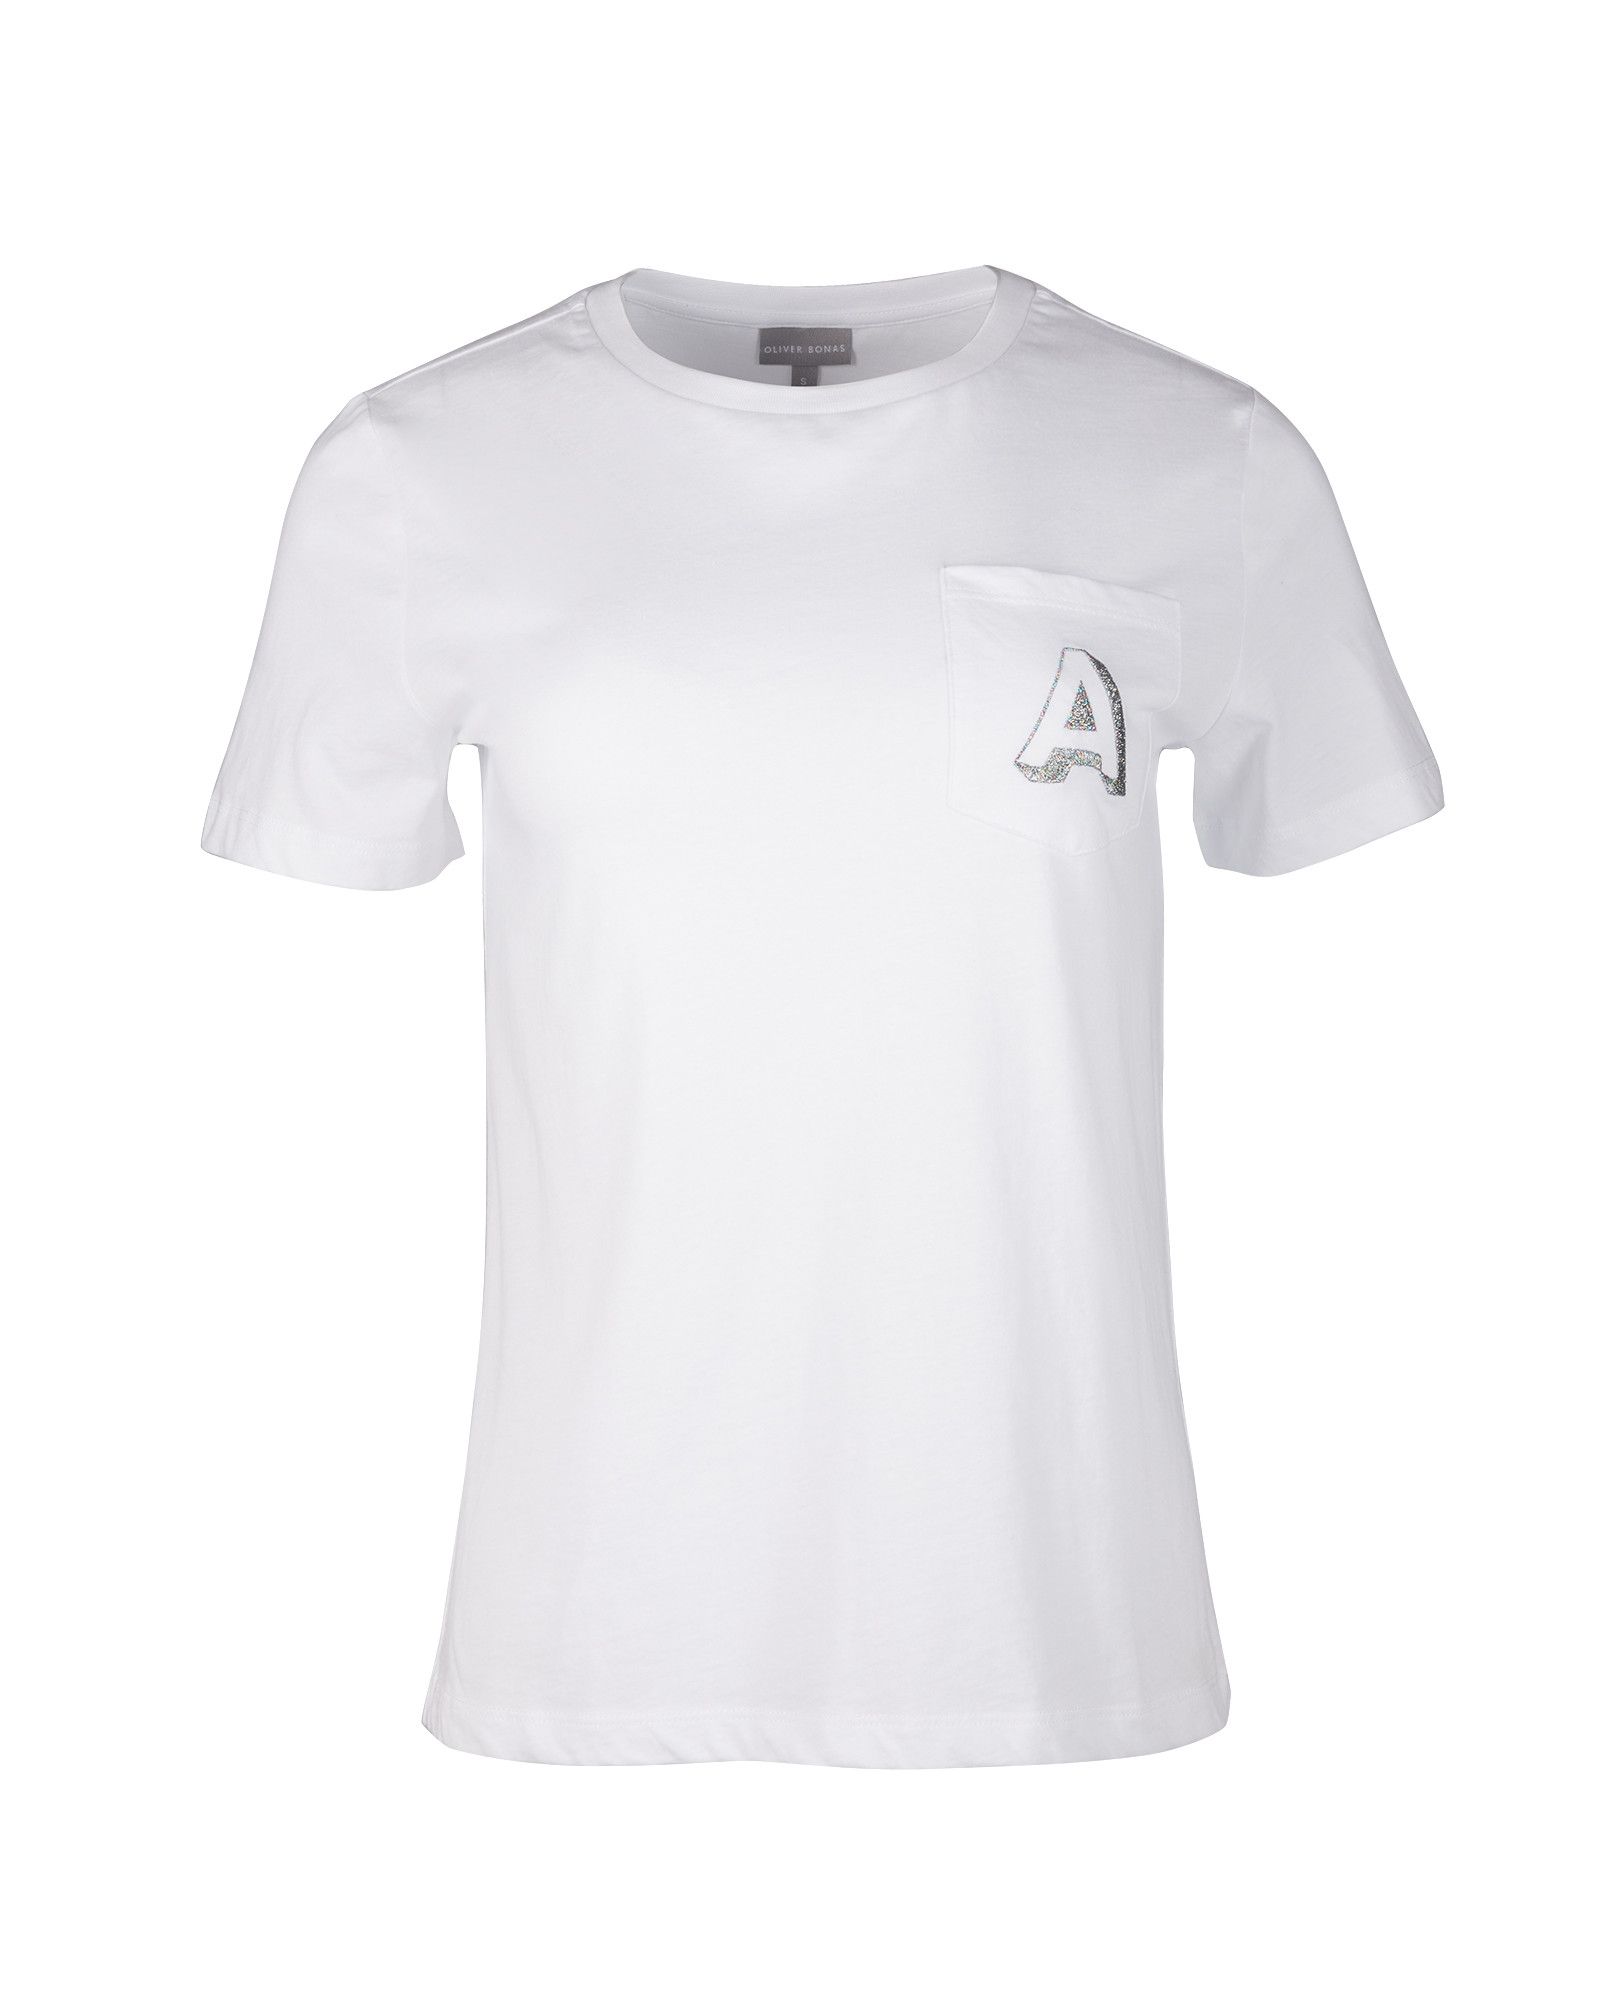 Embroidered Alphabet Initial White Cotton T Shirt Oliver Bonas